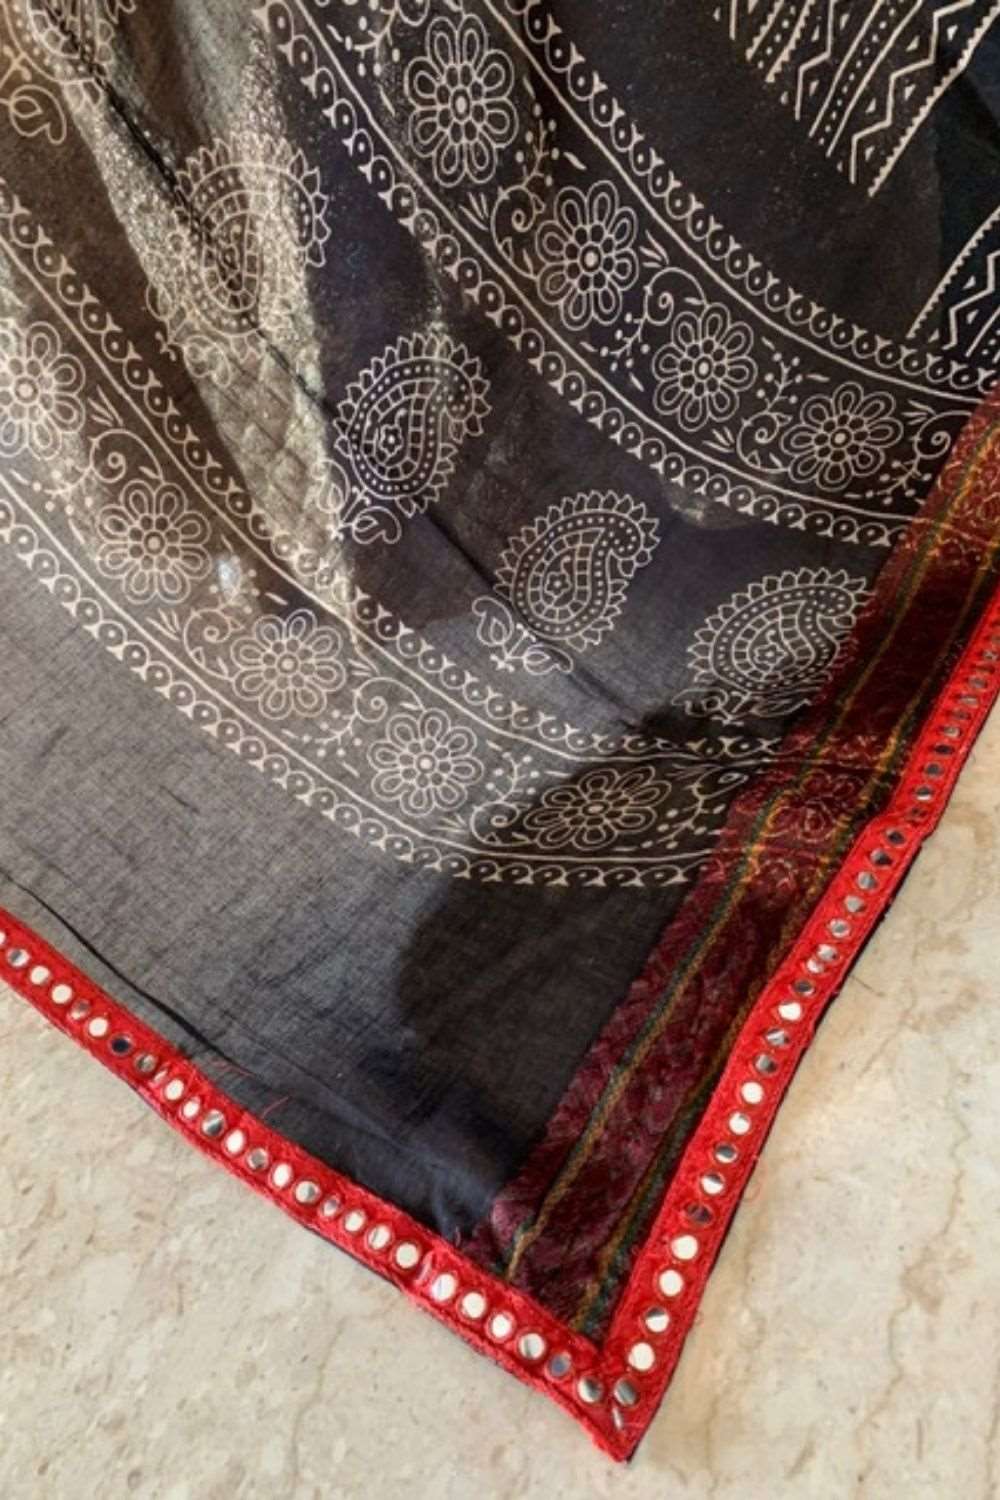 Black screen printed cotton dupatta with maroon mirrorwork border